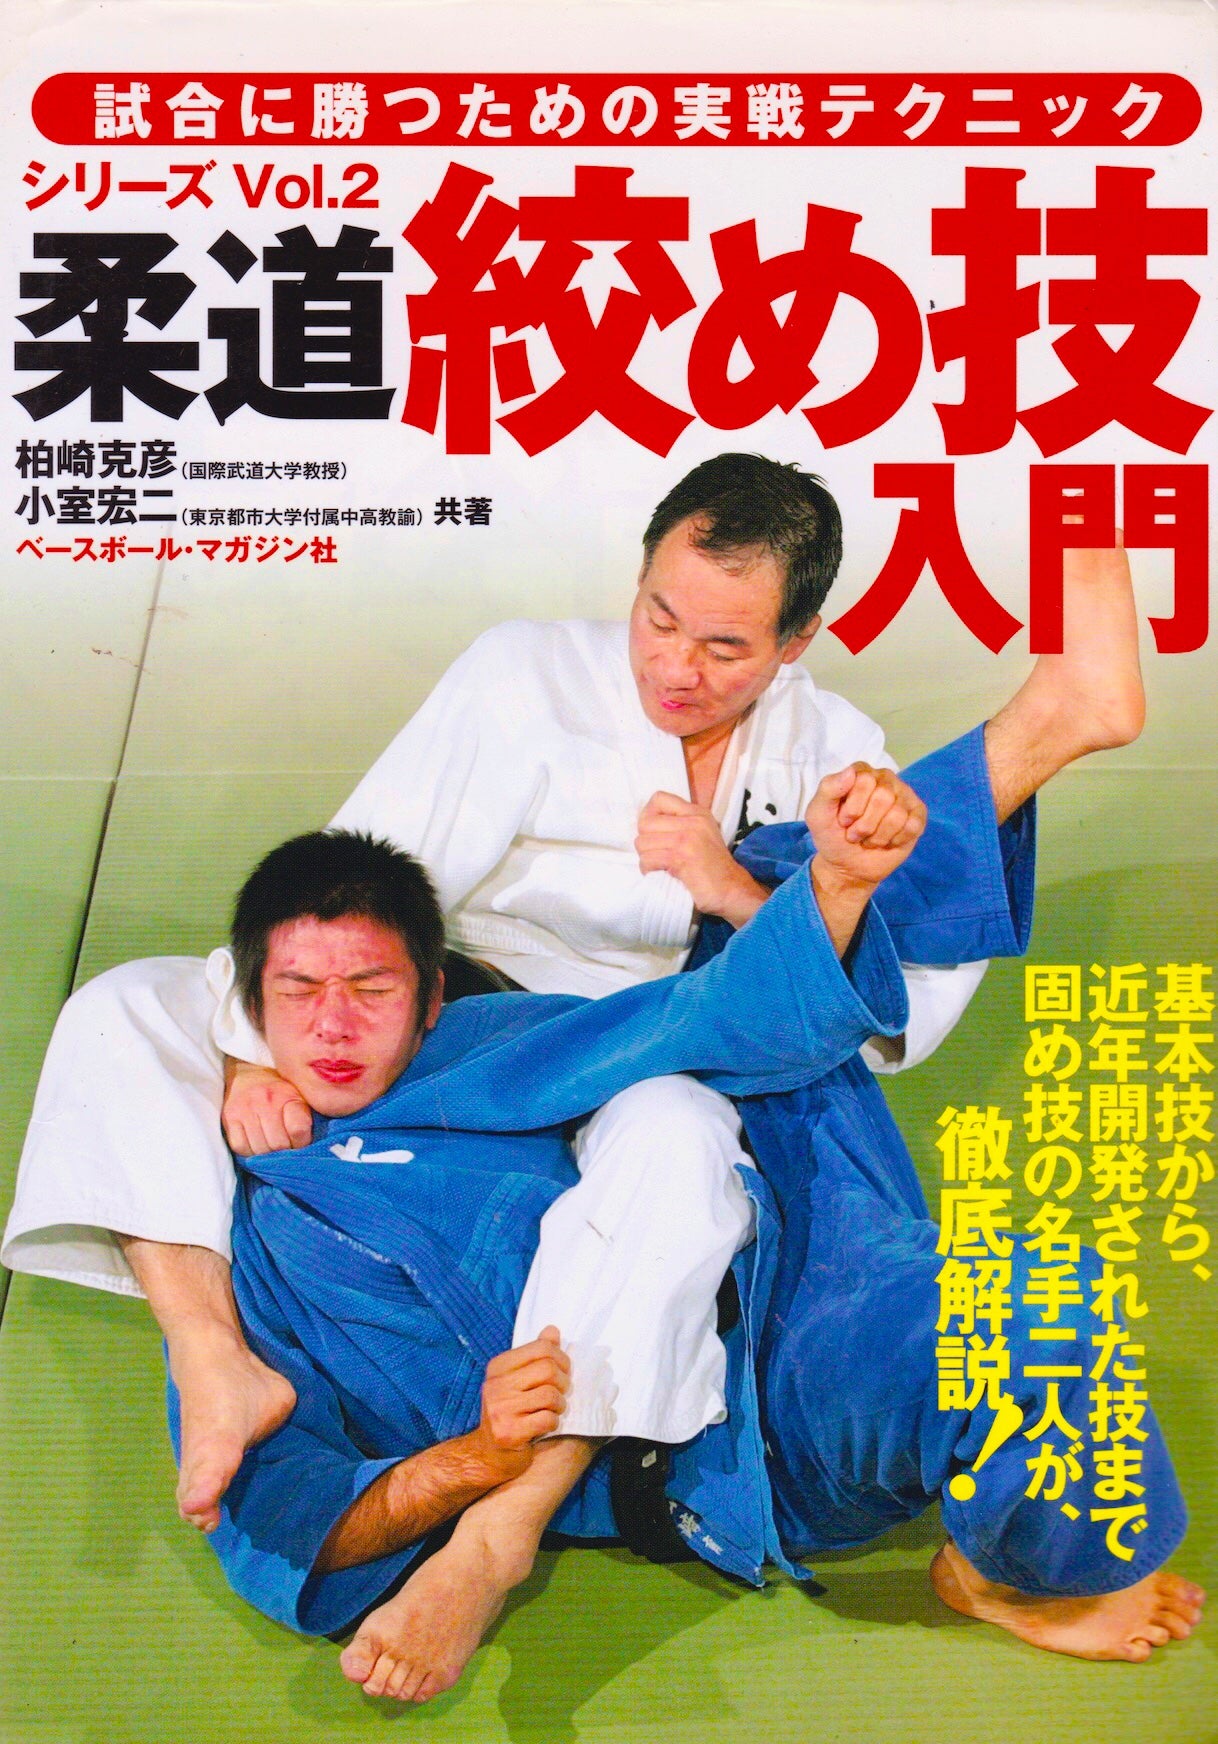 Judo Competition Series Book 2: Intro to Judo Chokes by Katsuhiko Kashiwazaki (Preowned) - Budovideos